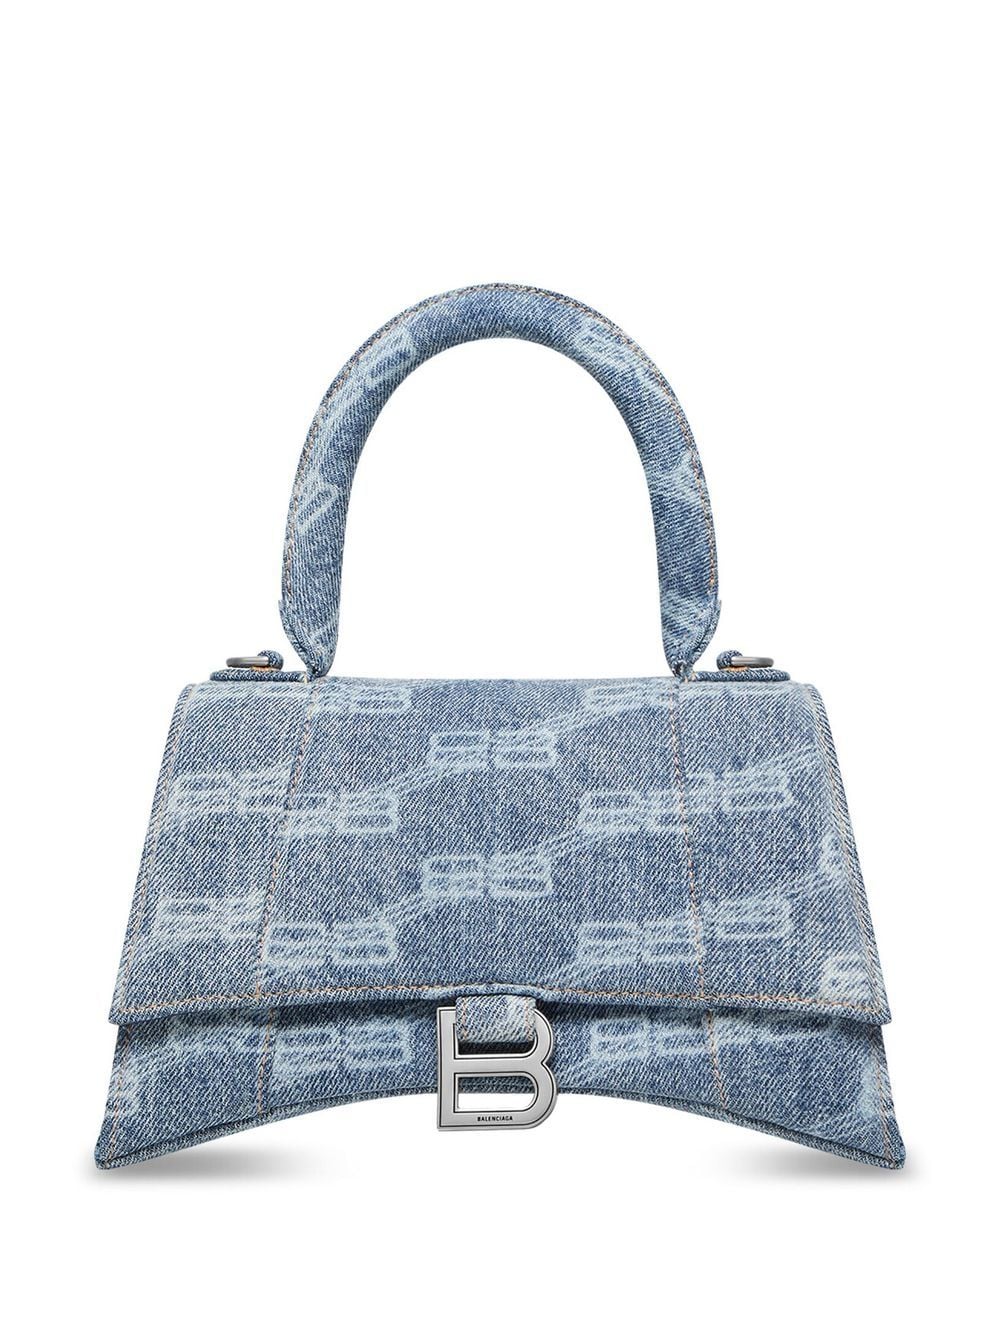 Balenciaga logo-print leather crossbody bag - 4716 - BLUE